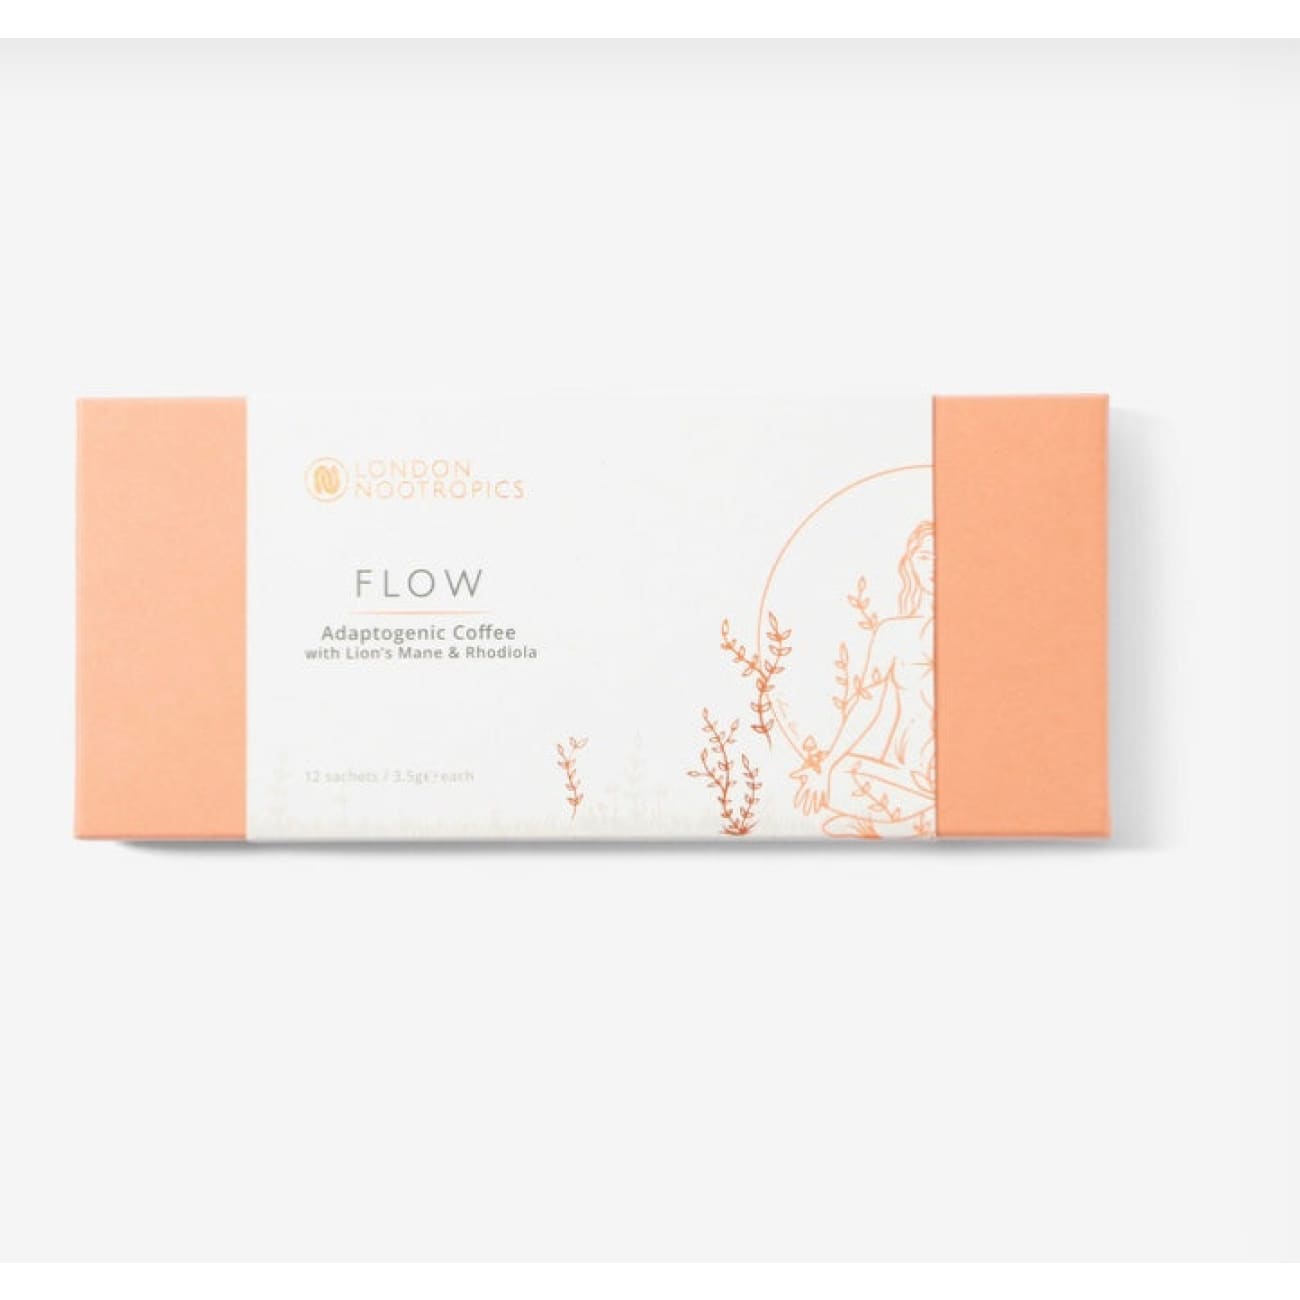 Flow Lion’s Mane Mushroom Coffee - 12 Sachets Flow Coffee -